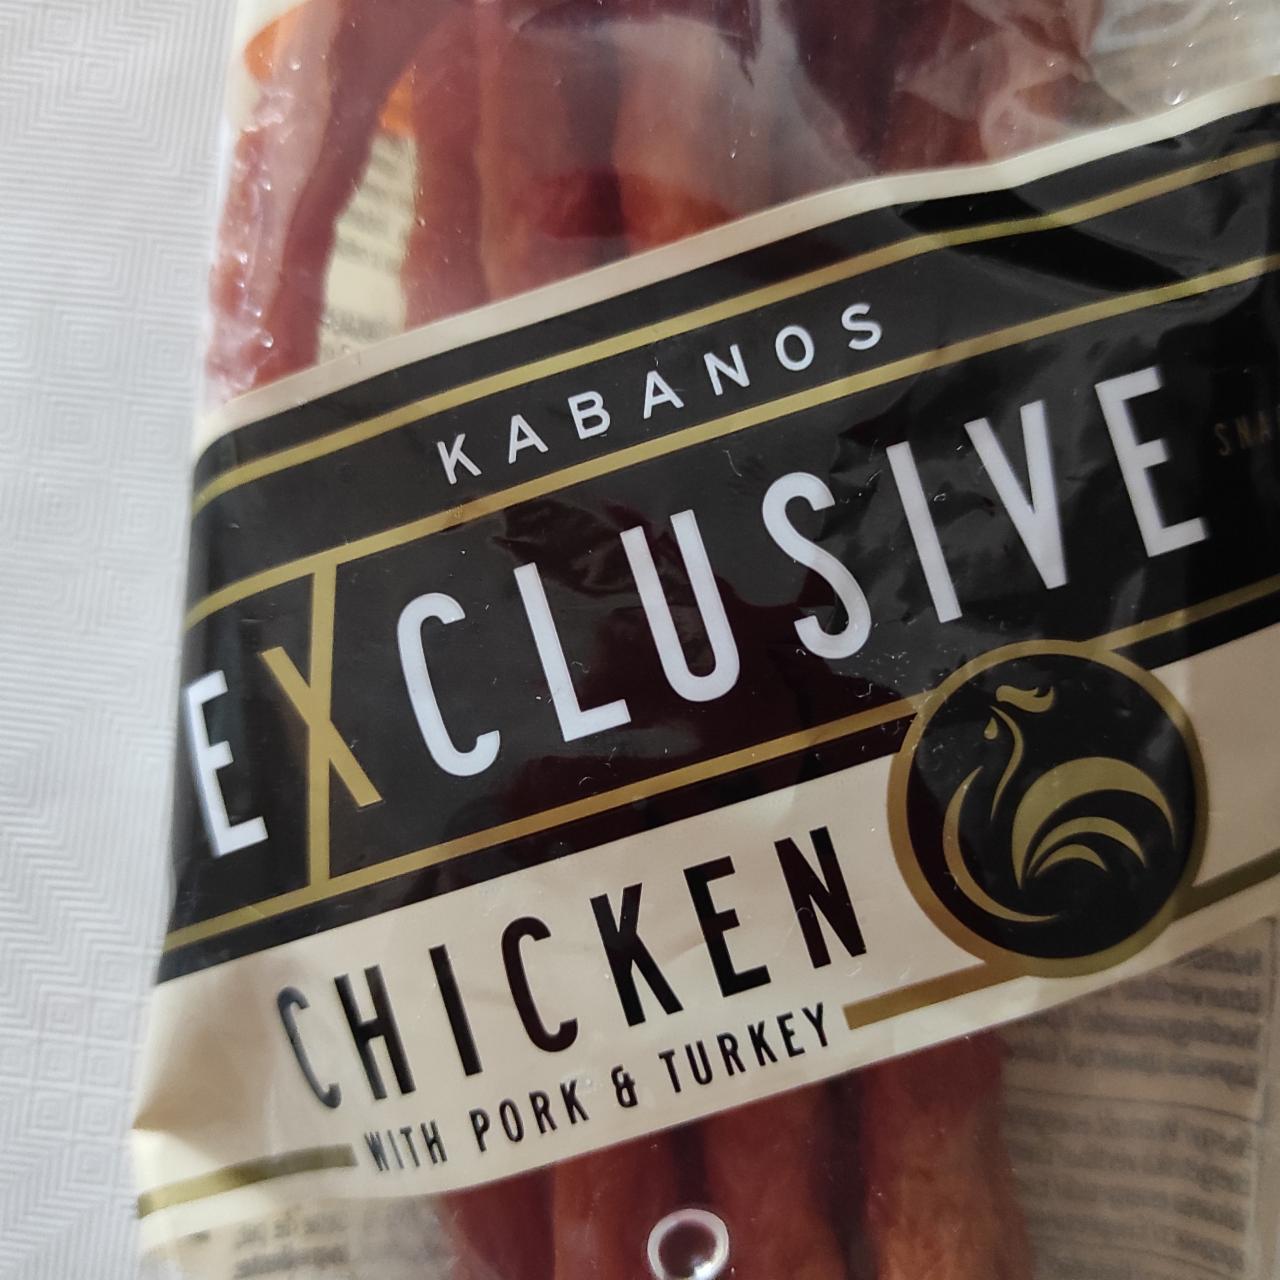 Фото - Кабаноси Chicken With Pork & Turkey Exclusive Kabanos